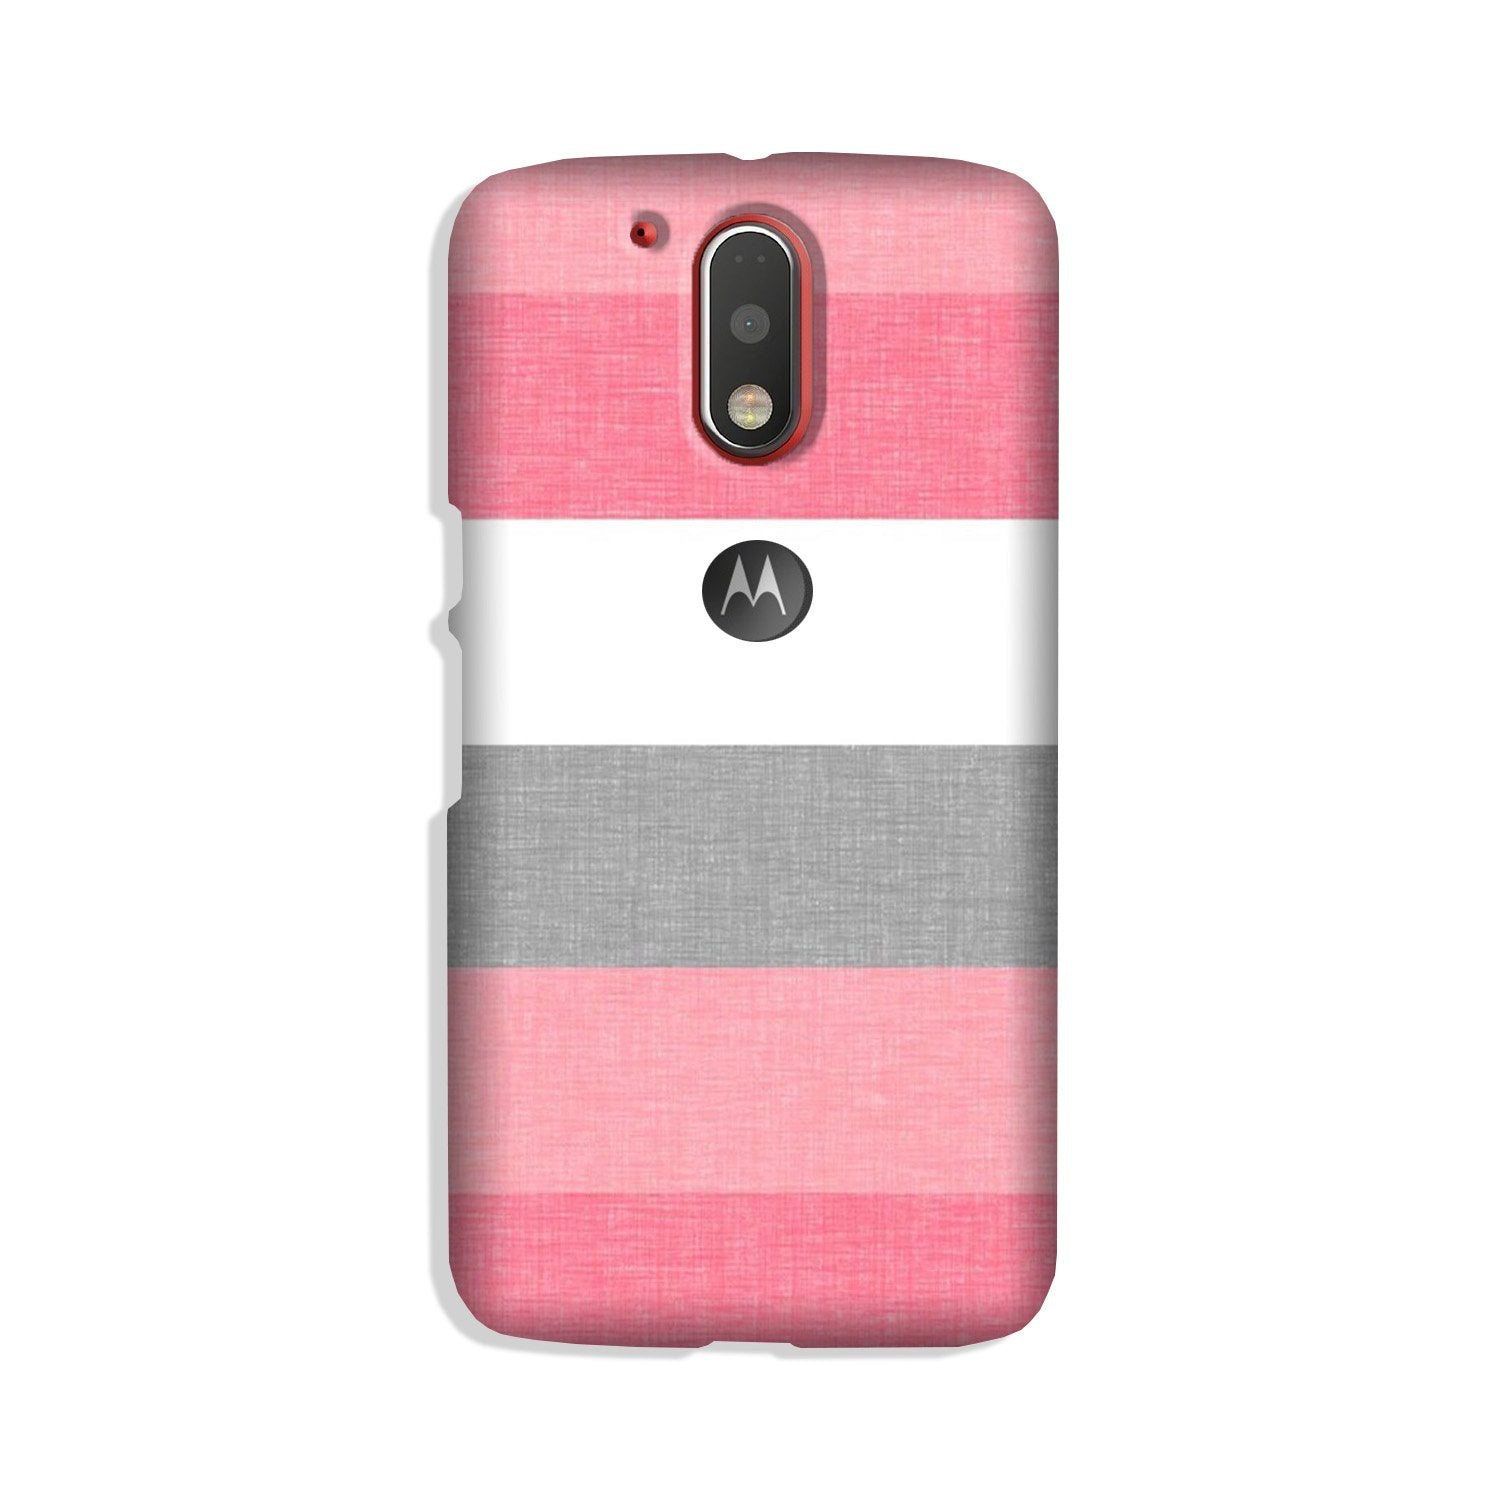 Pink white pattern Case for Moto G4 Plus